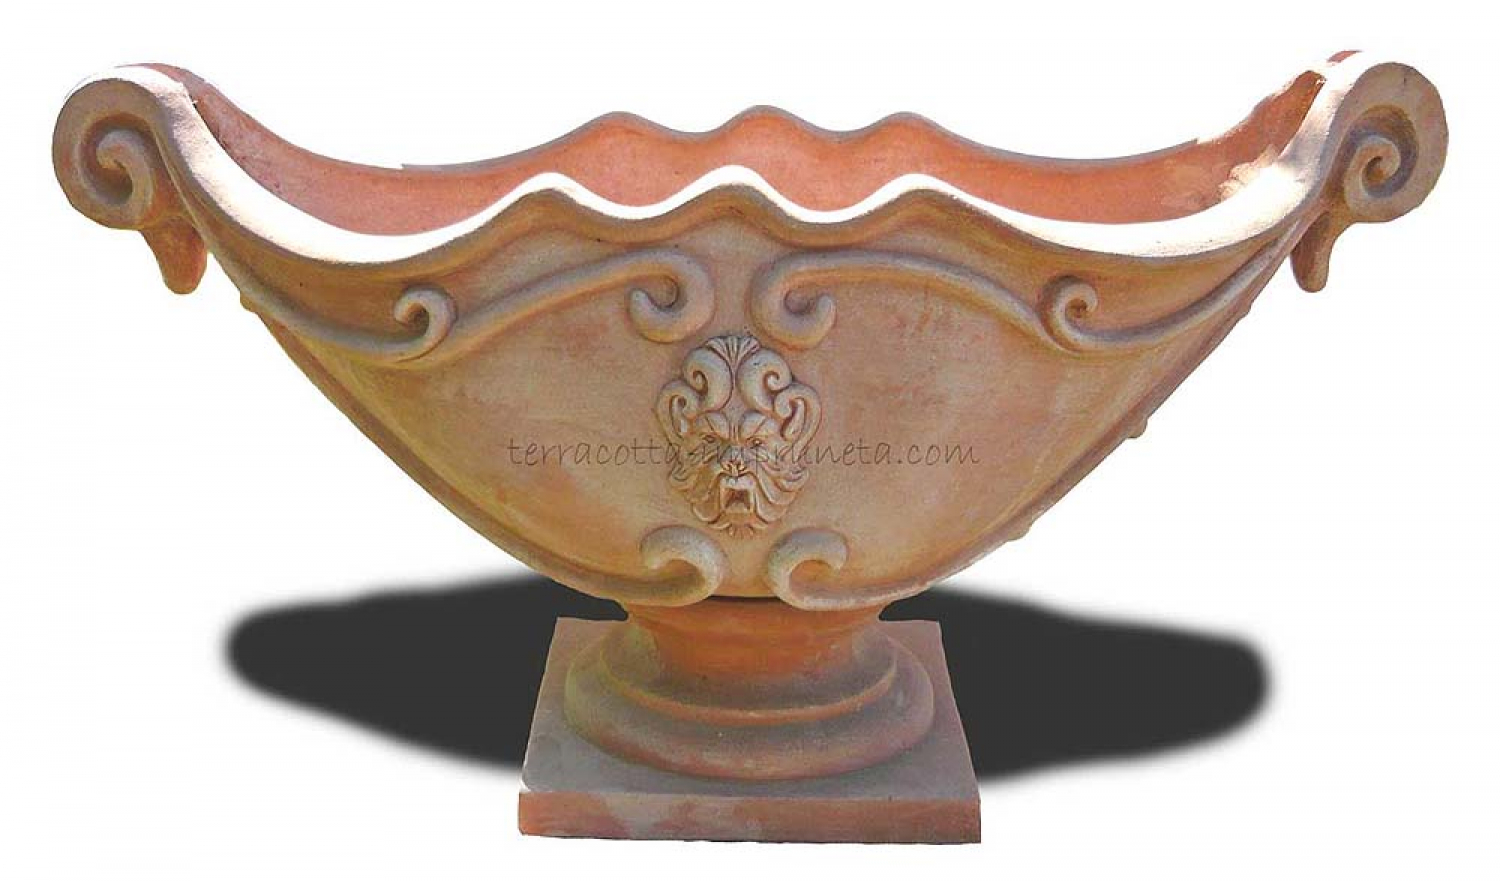 Ovaler Terracotta-Pokal in Form einer Gondel.